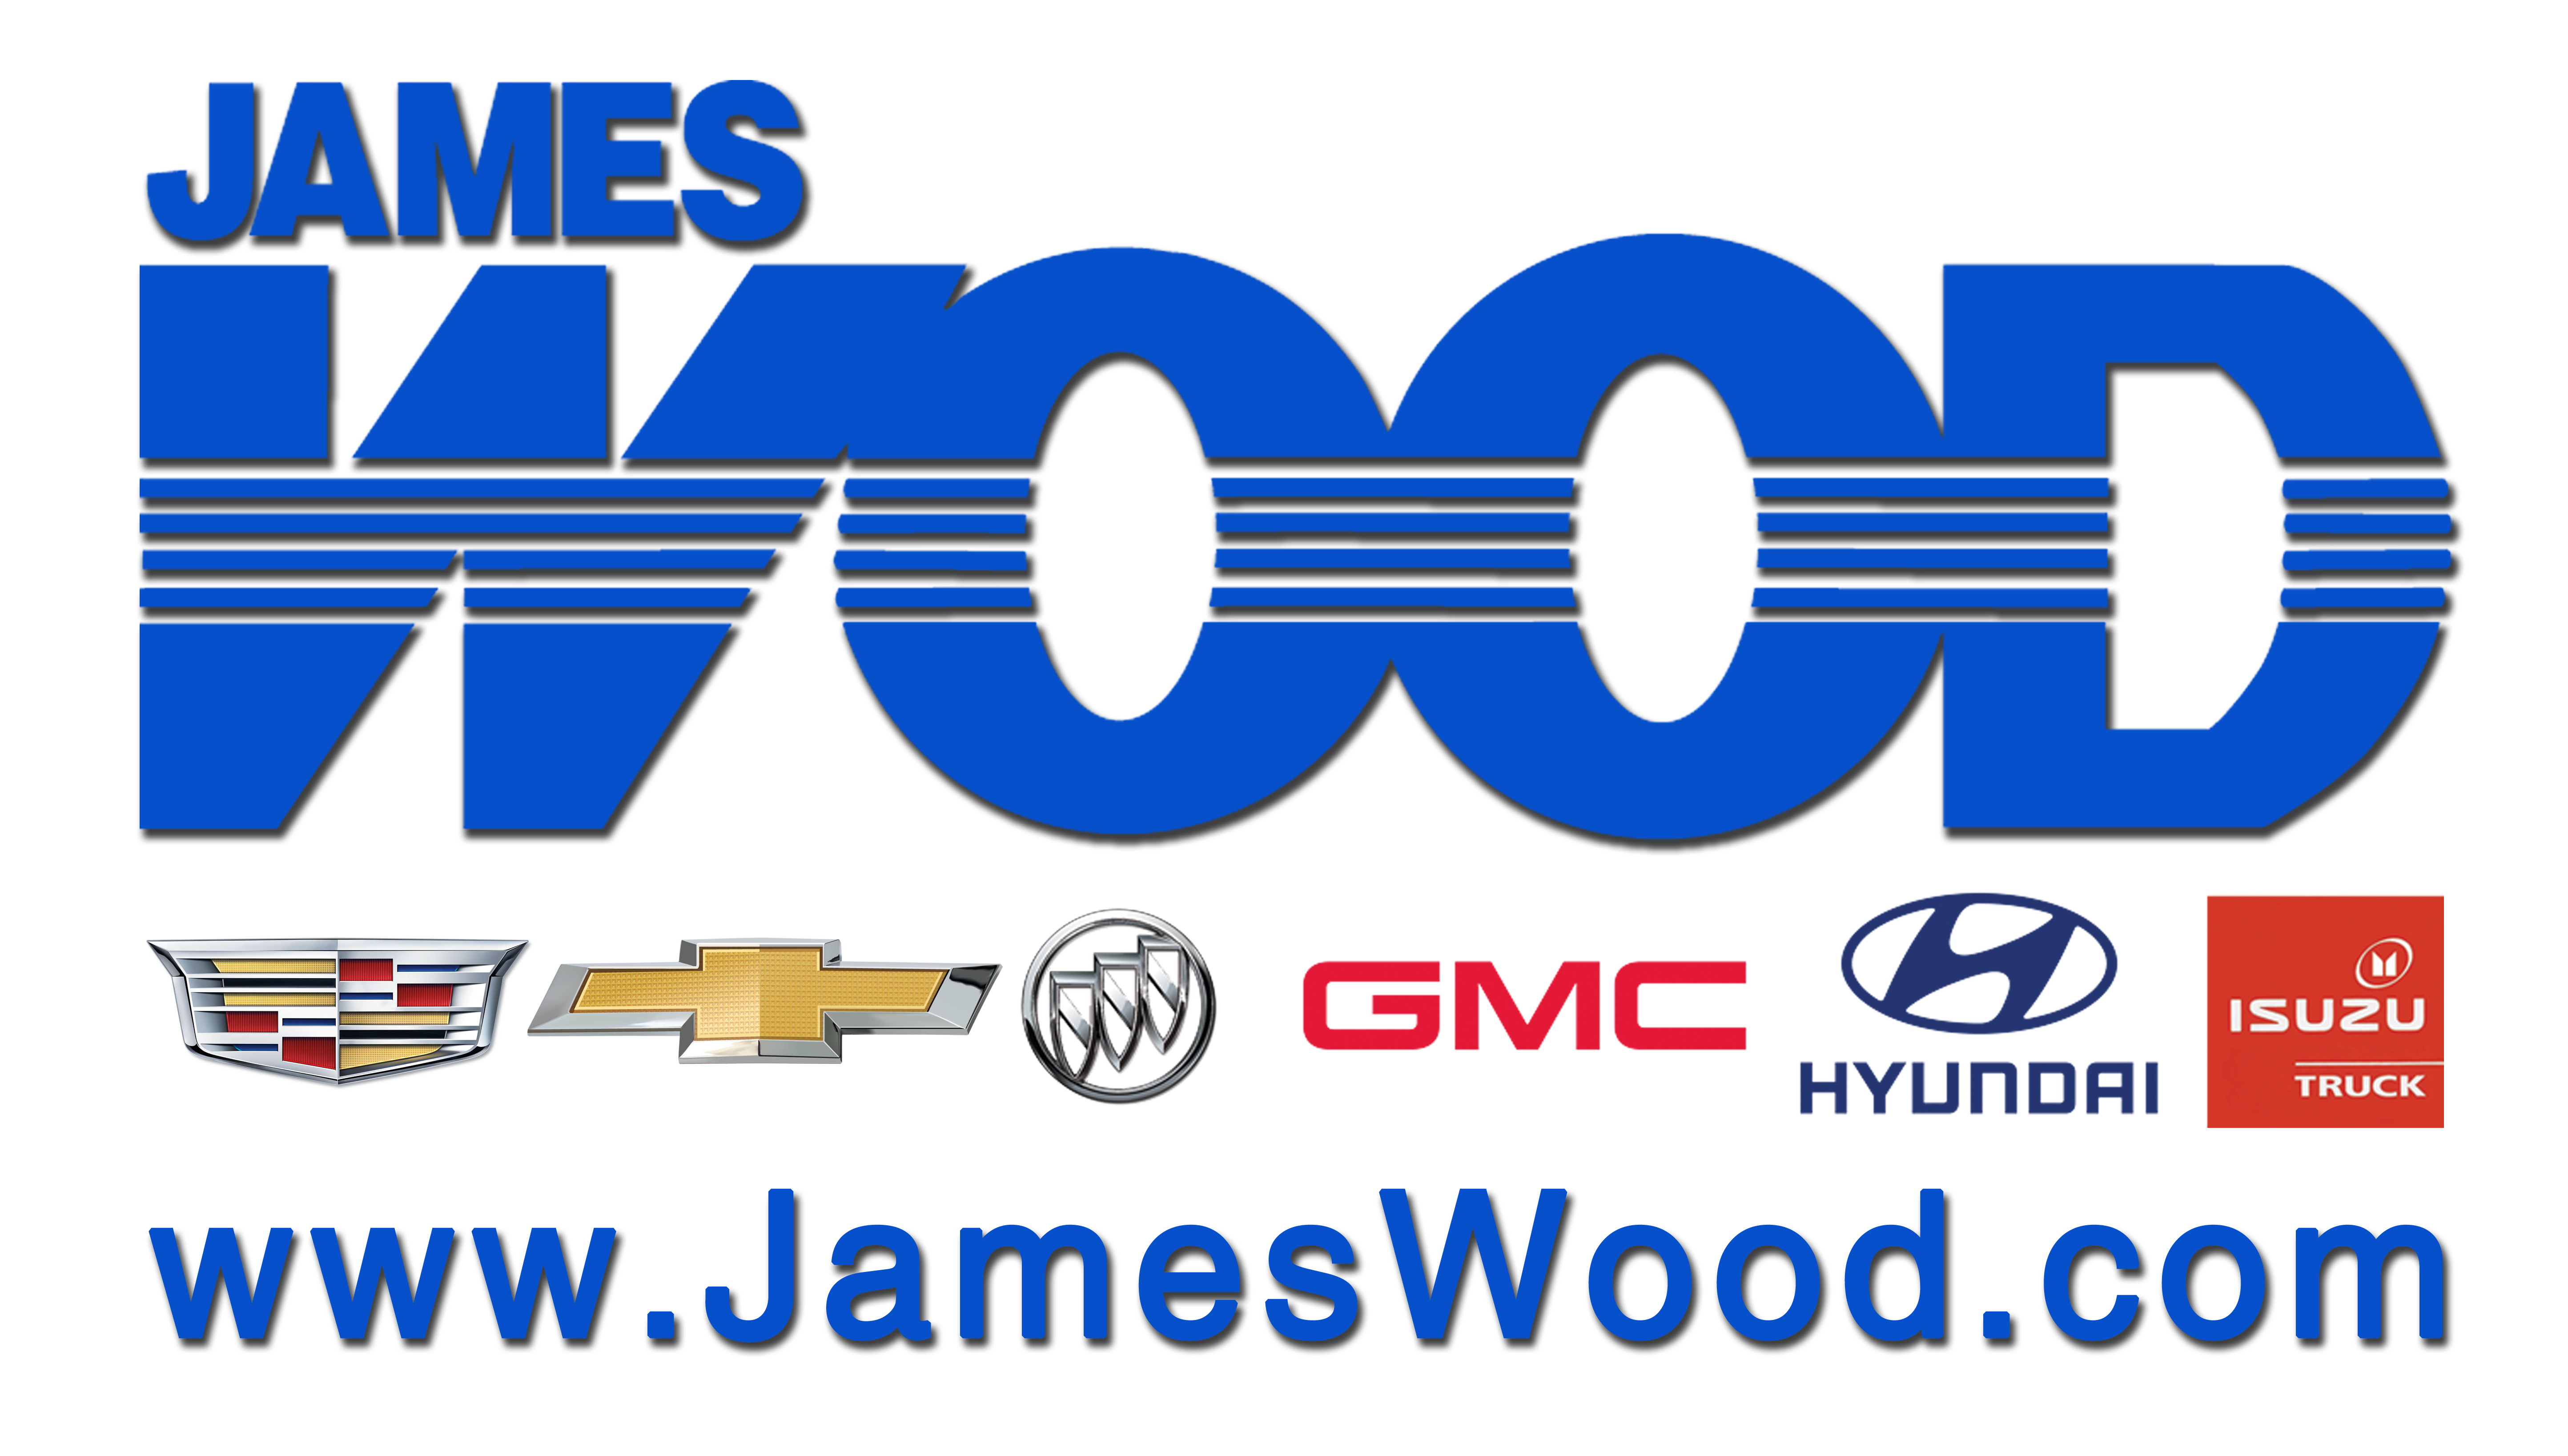 James Wood